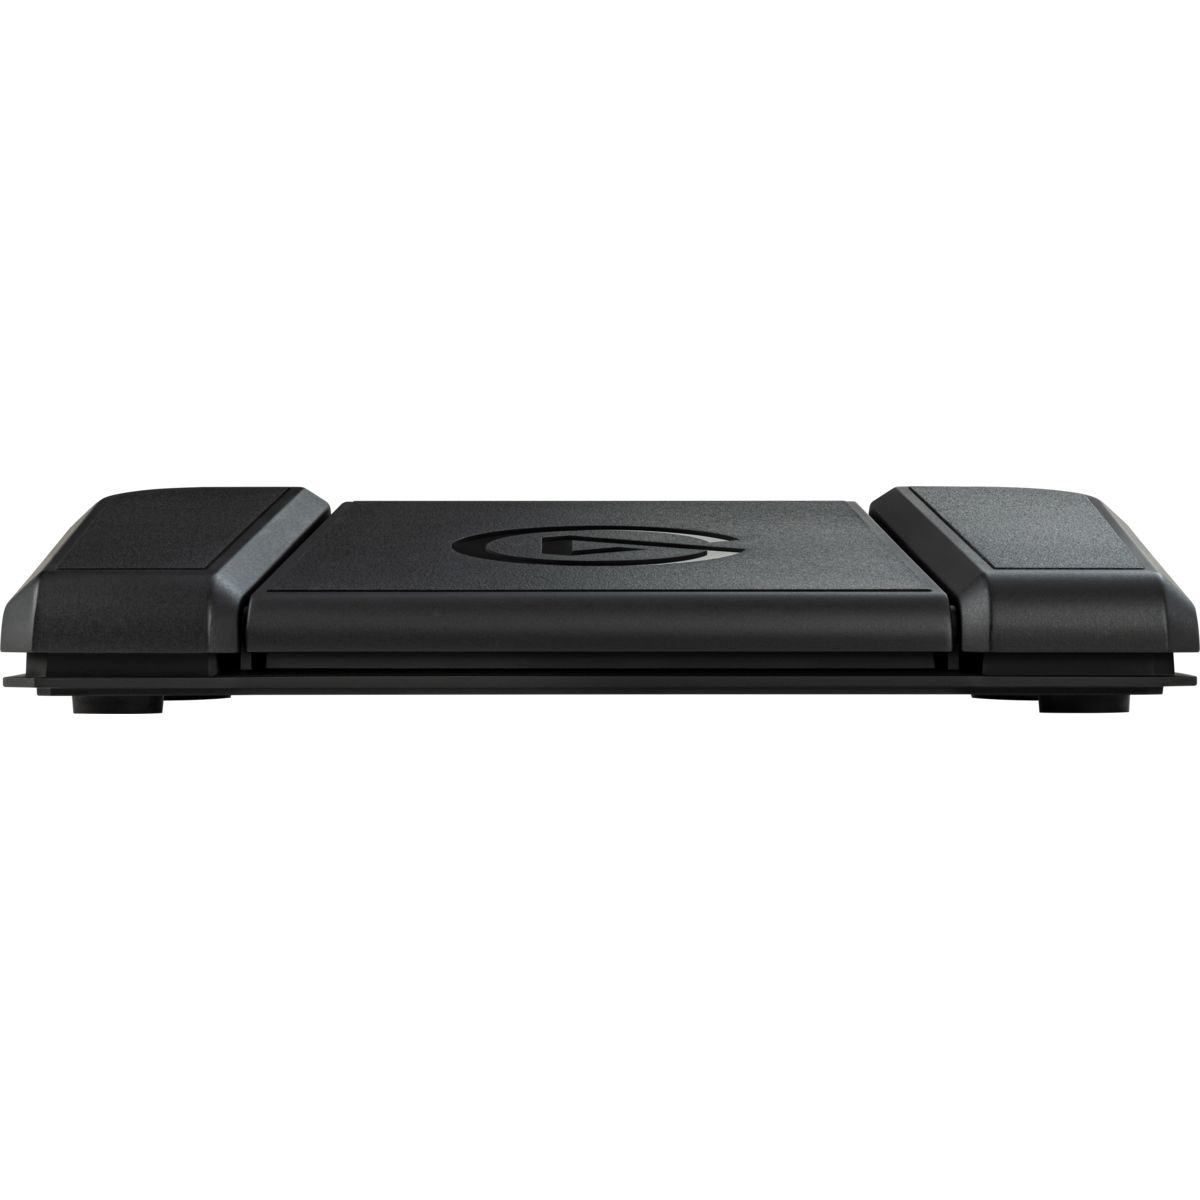 10GBF9901 - Pedal ELGATO Stream Deck pedal (10GBF9901)